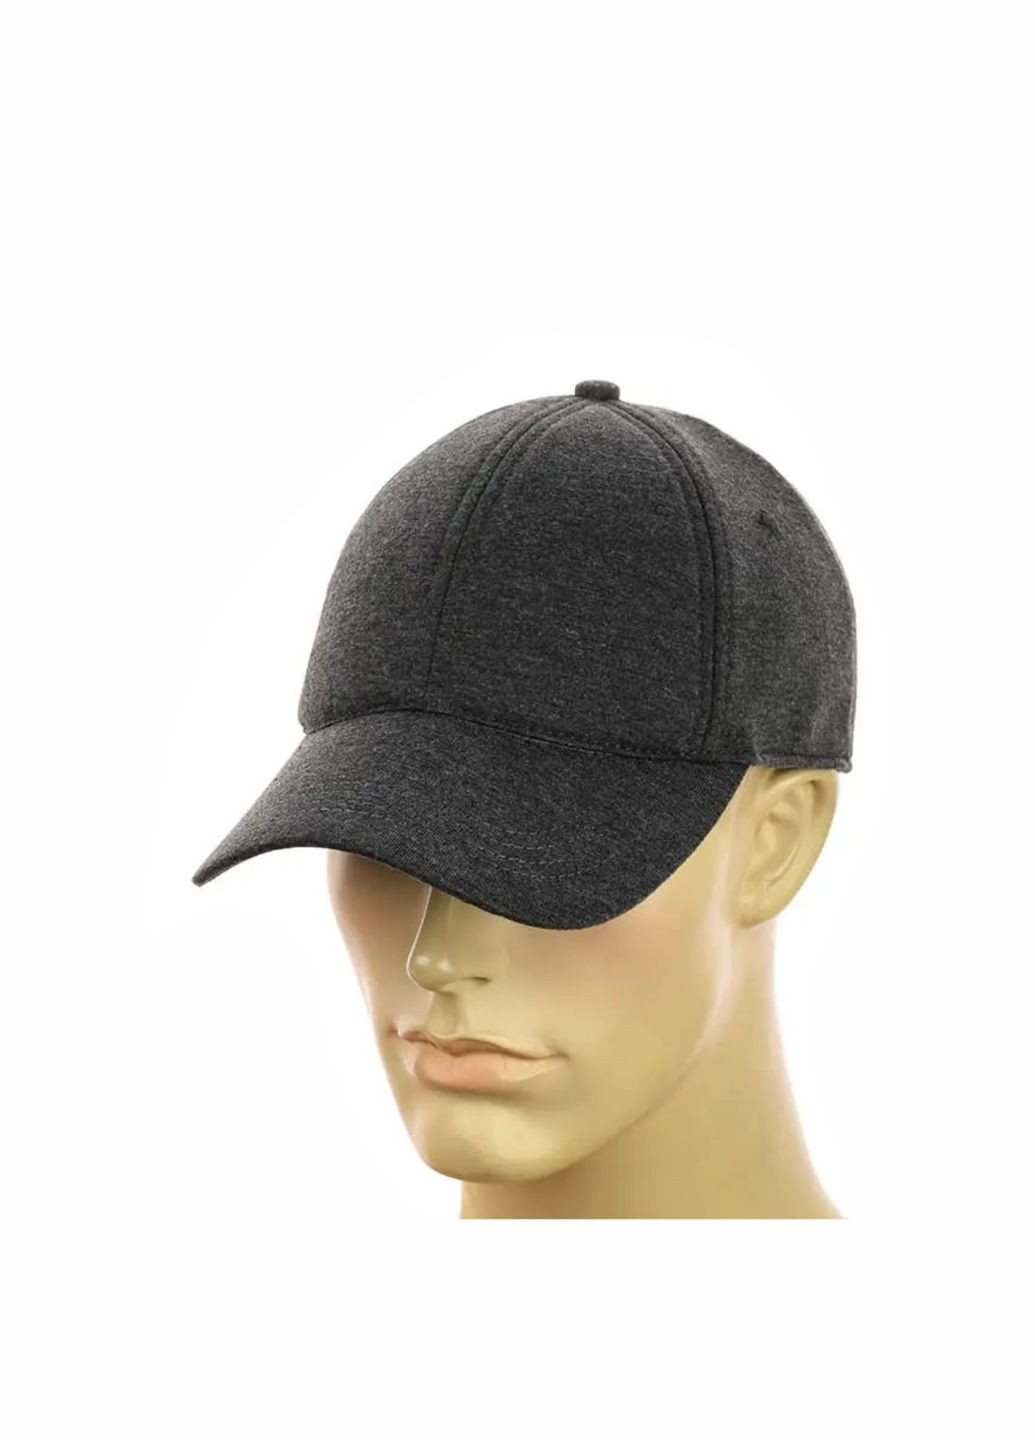 Трикотажная мужская кепка на резинке без логотипа No Brand чоловіча кепка закрита (278279344)